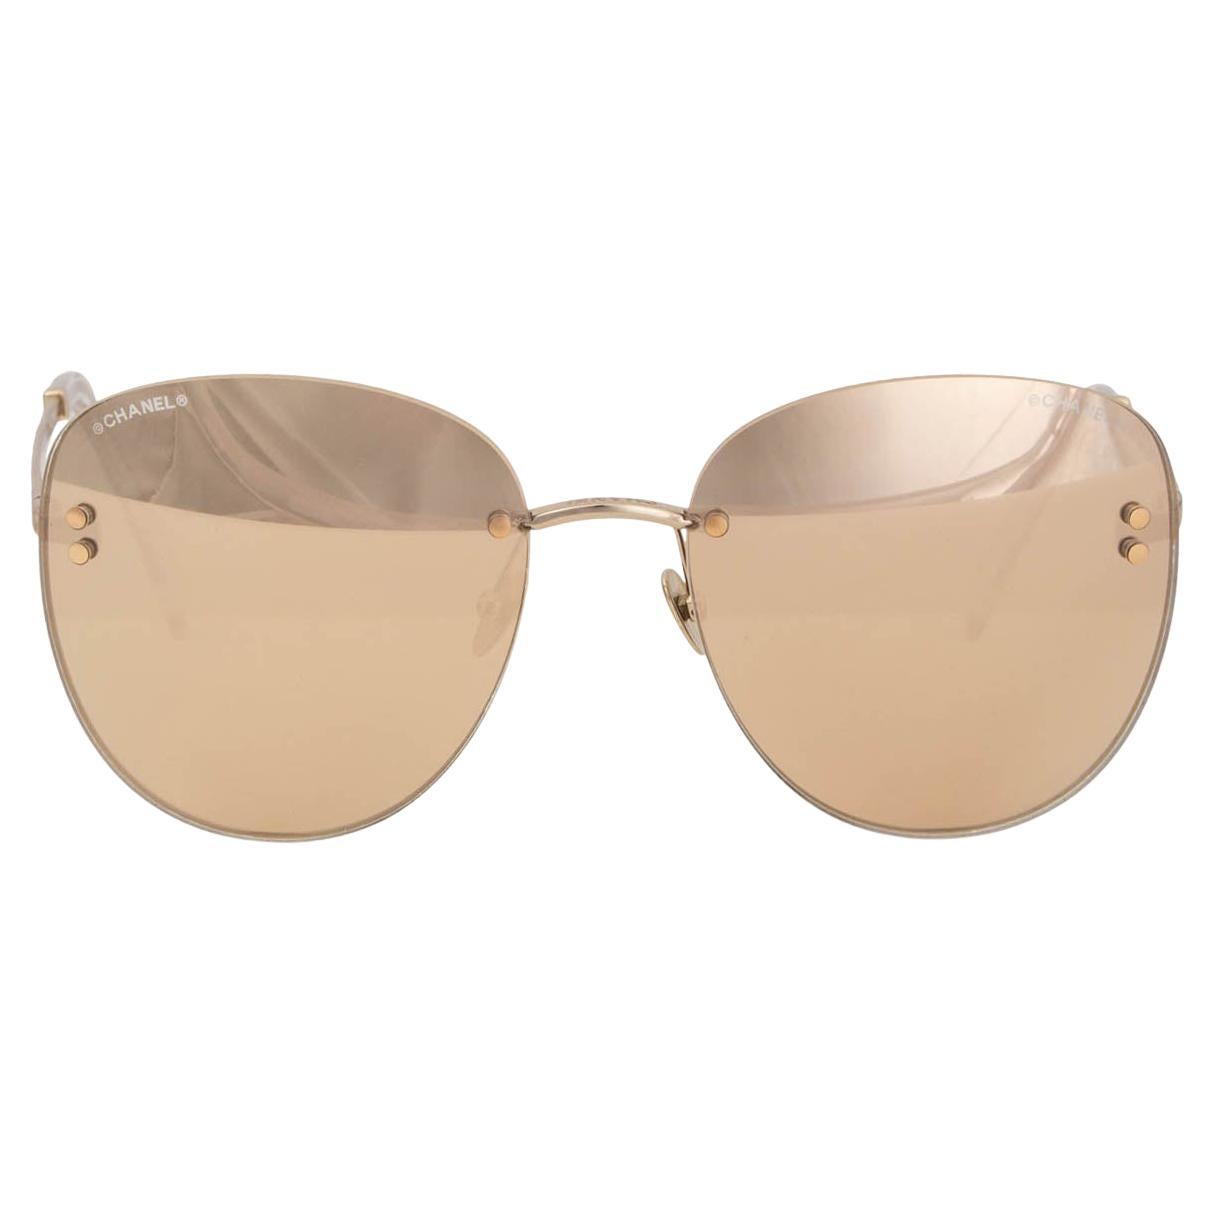 Chanel Rectangle Sunglasses - Metal, Gold - Polarized - UV Protected - Women's Sunglasses - 9559 C395/S6